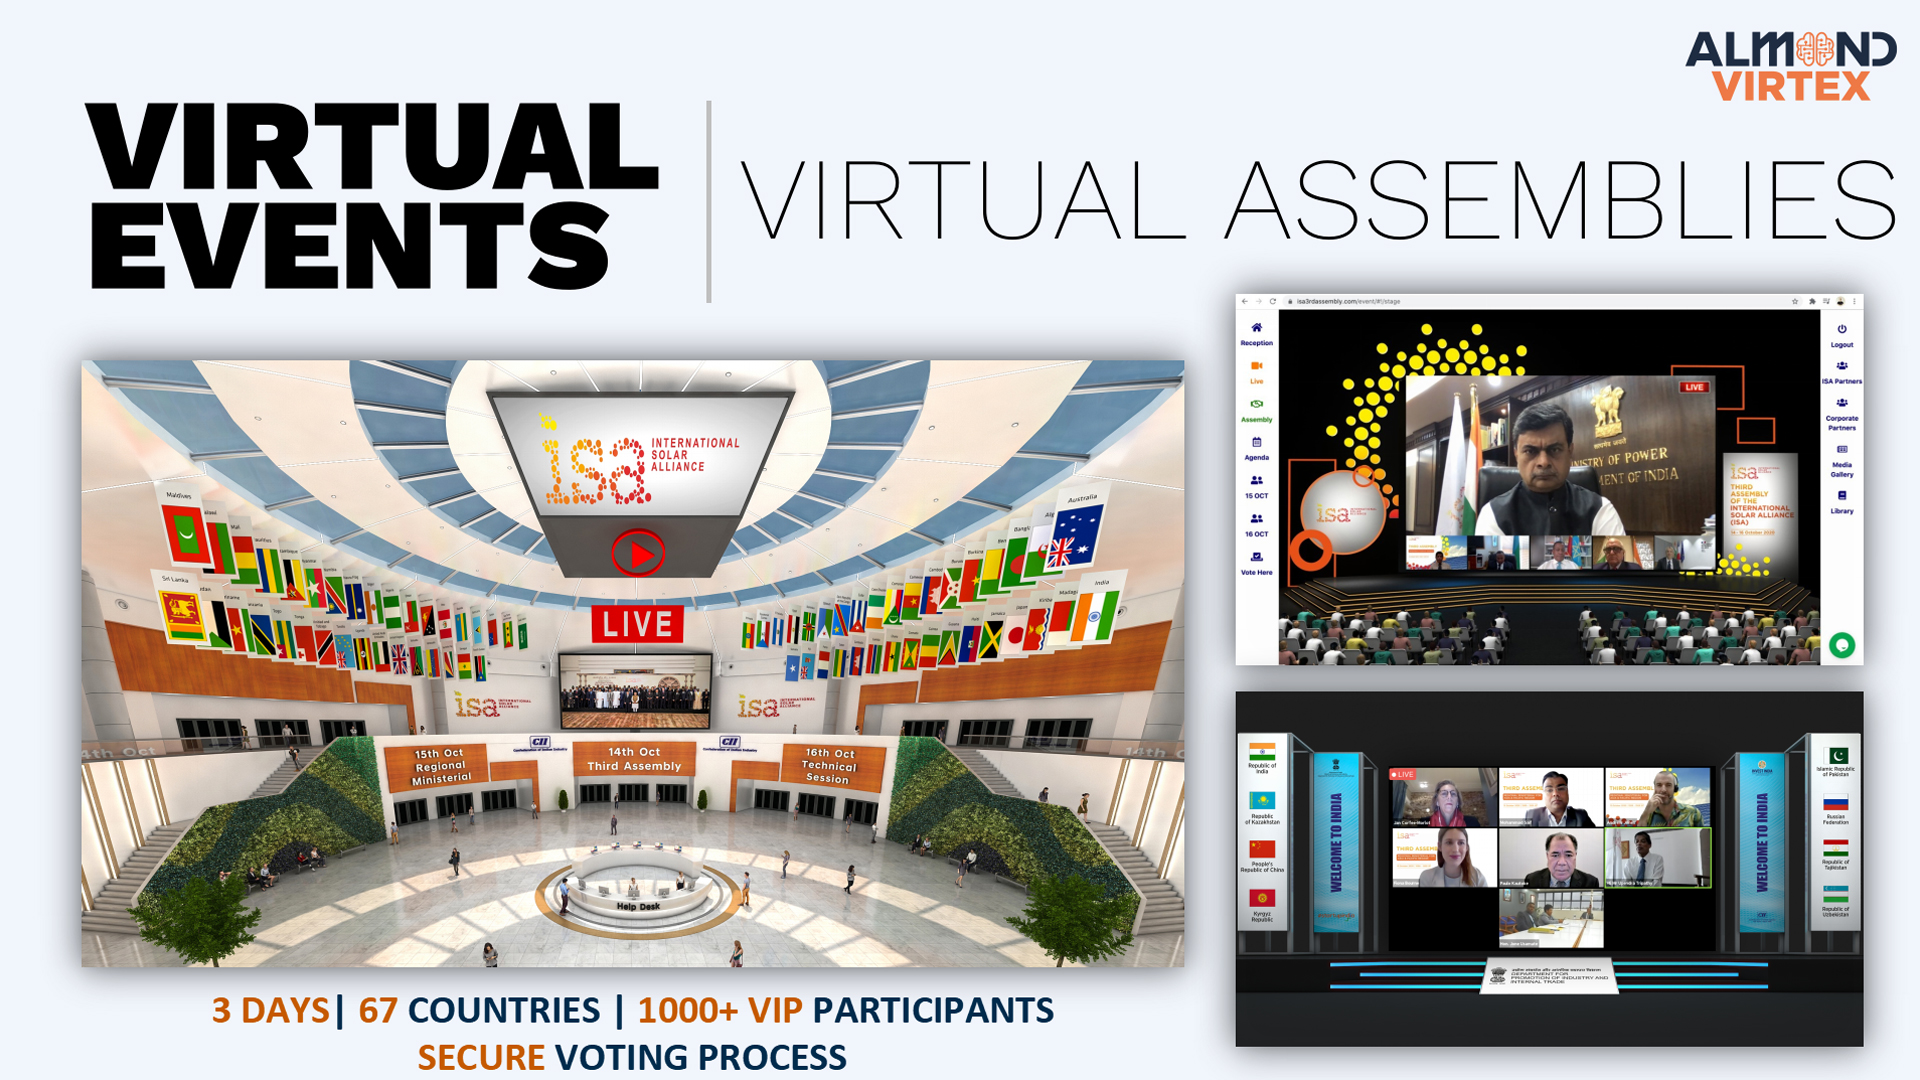 Almond Virtex Virtual Event Platform - Virtual Assembly